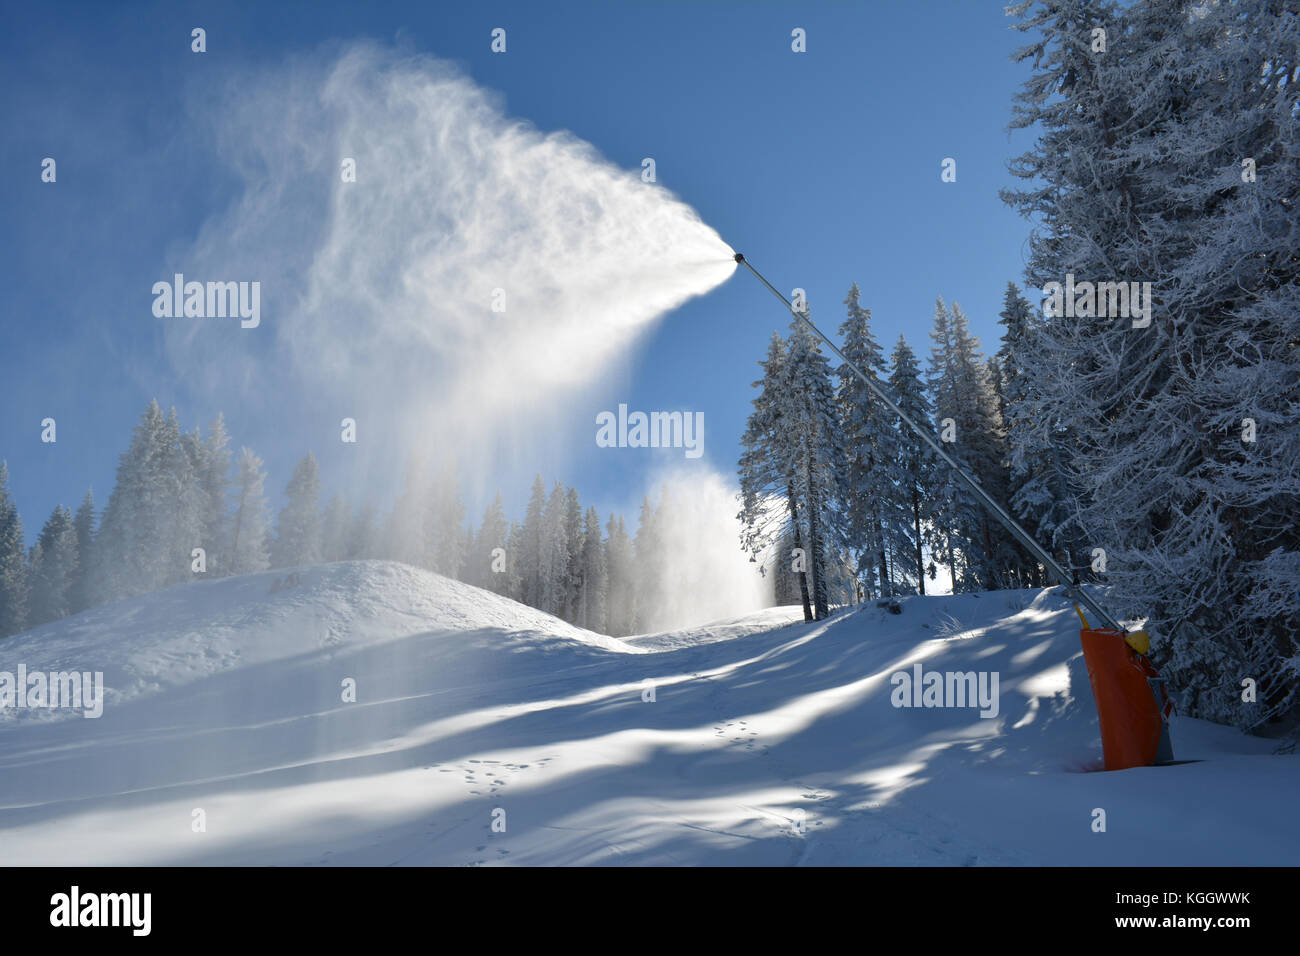 https://c8.alamy.com/comp/KGGWWK/snow-machine-in-action-artifical-snow-making-ski-resort-kopaonik-serbia-KGGWWK.jpg